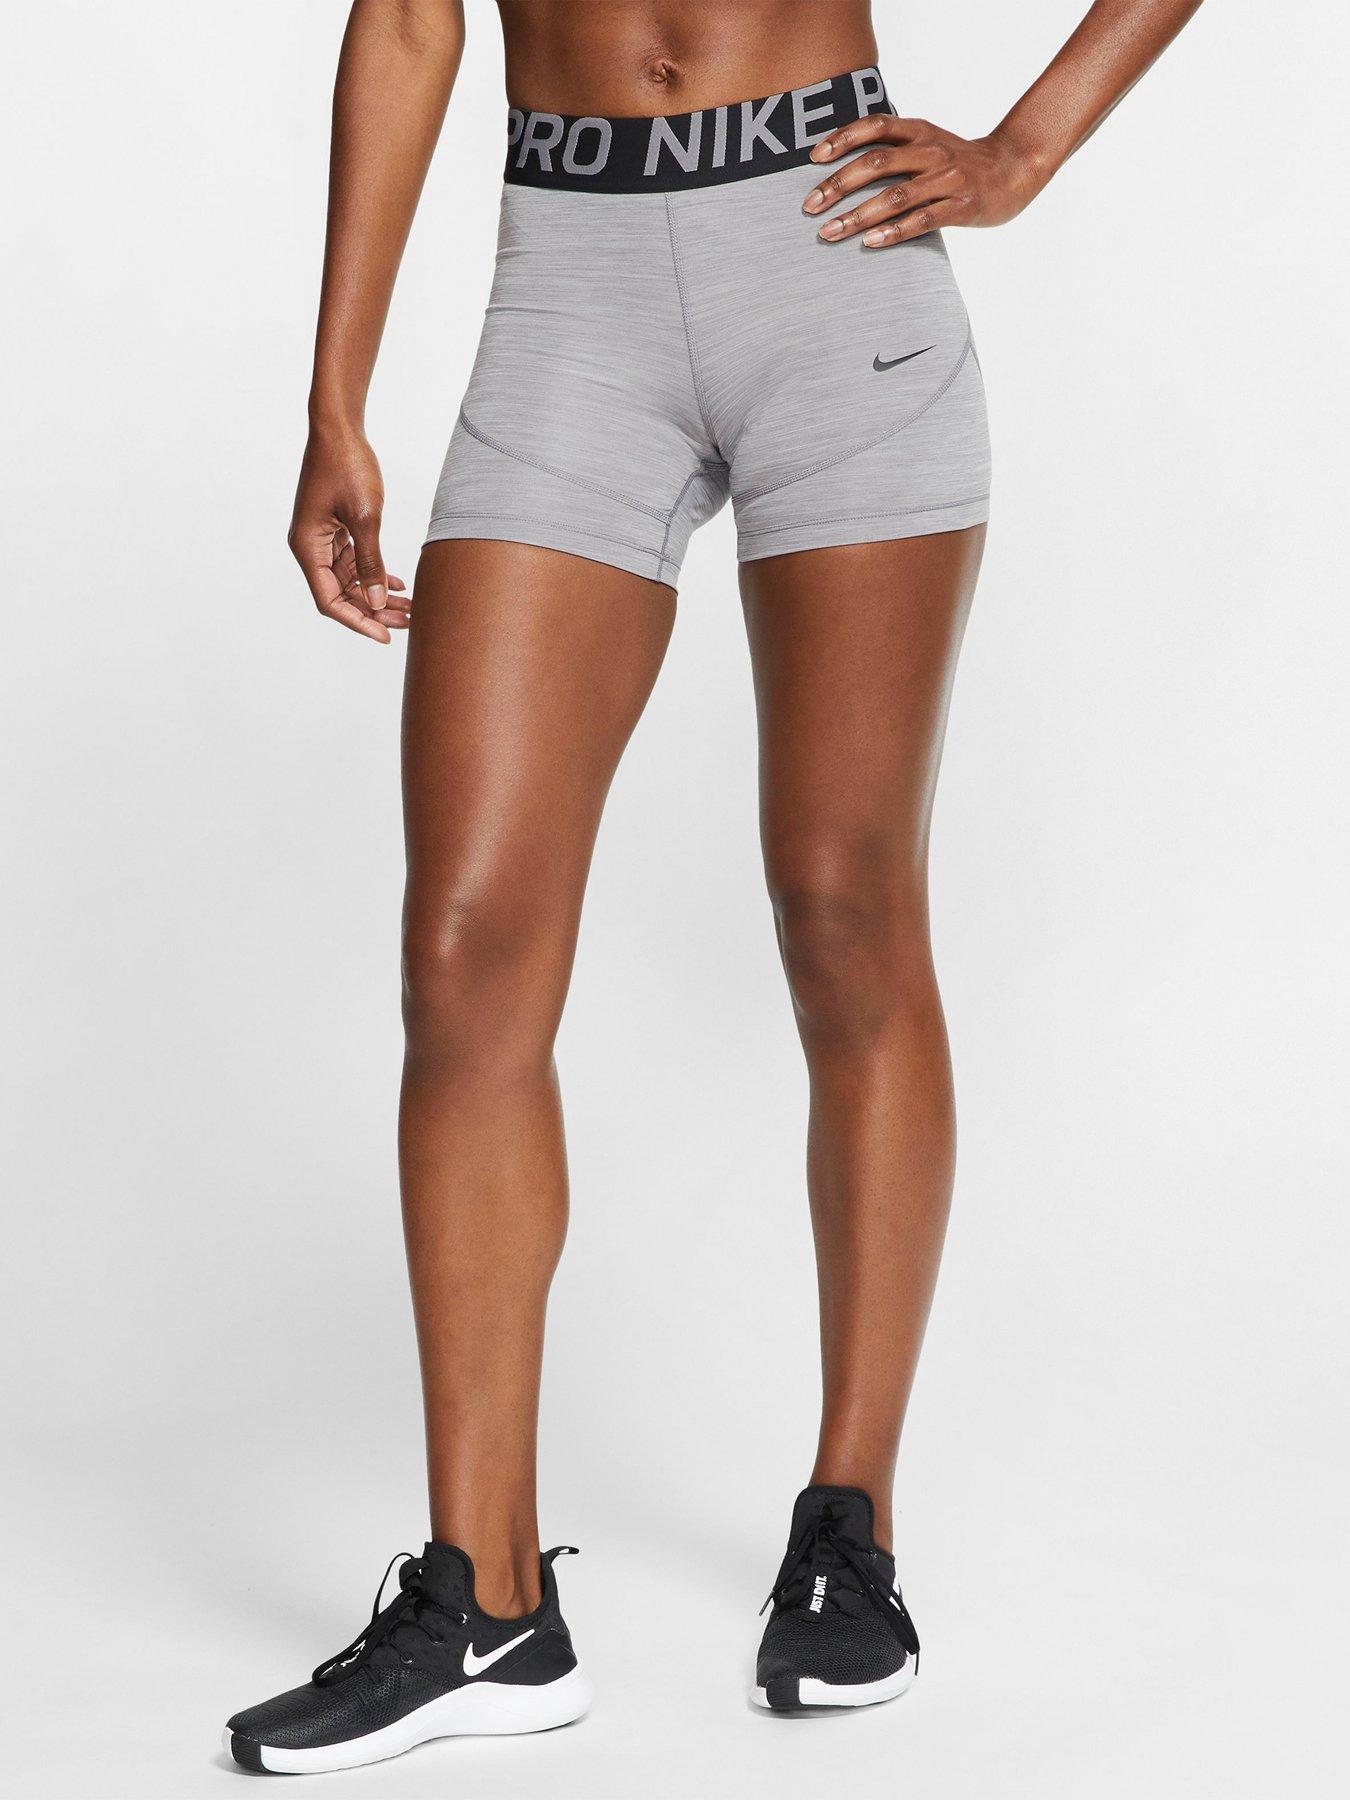 grey nike pro shorts womens